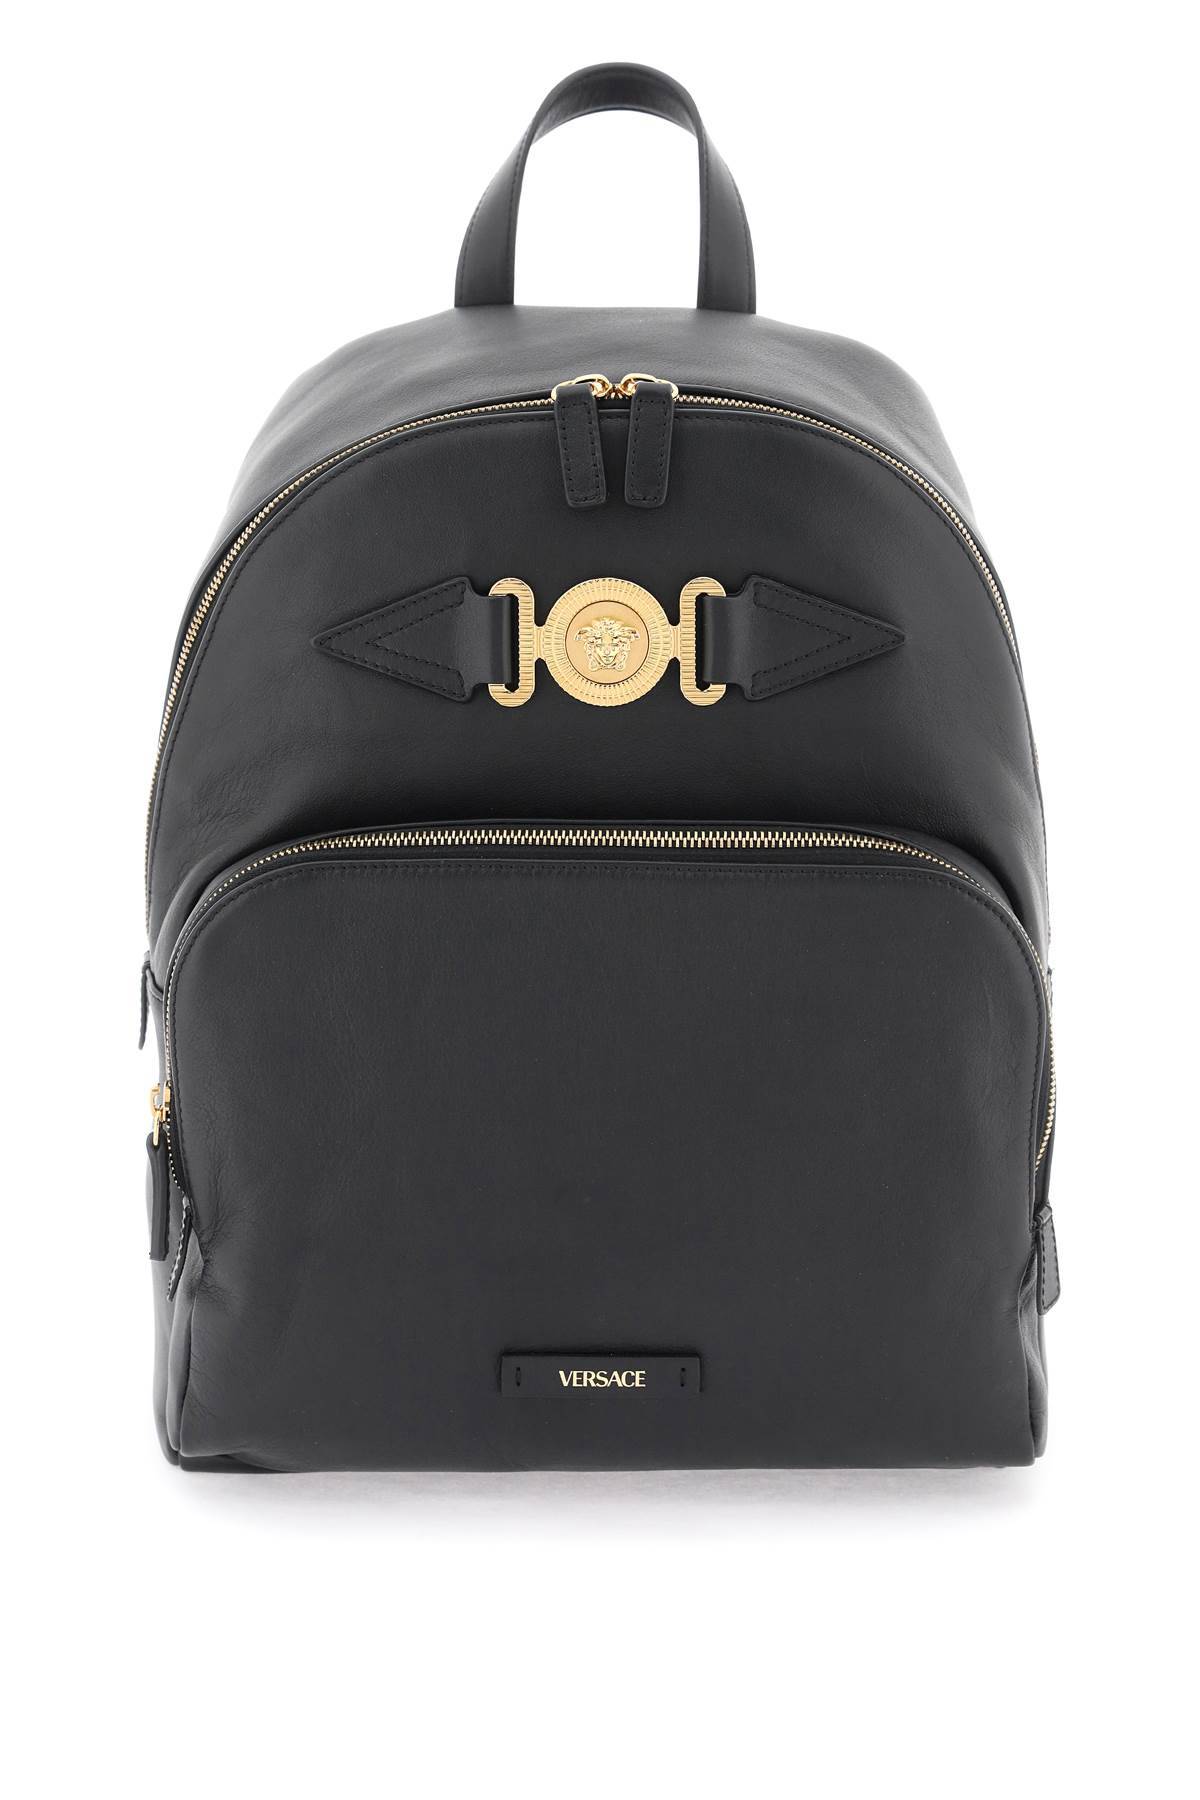 Versace VERSACE medusa biggie backpack